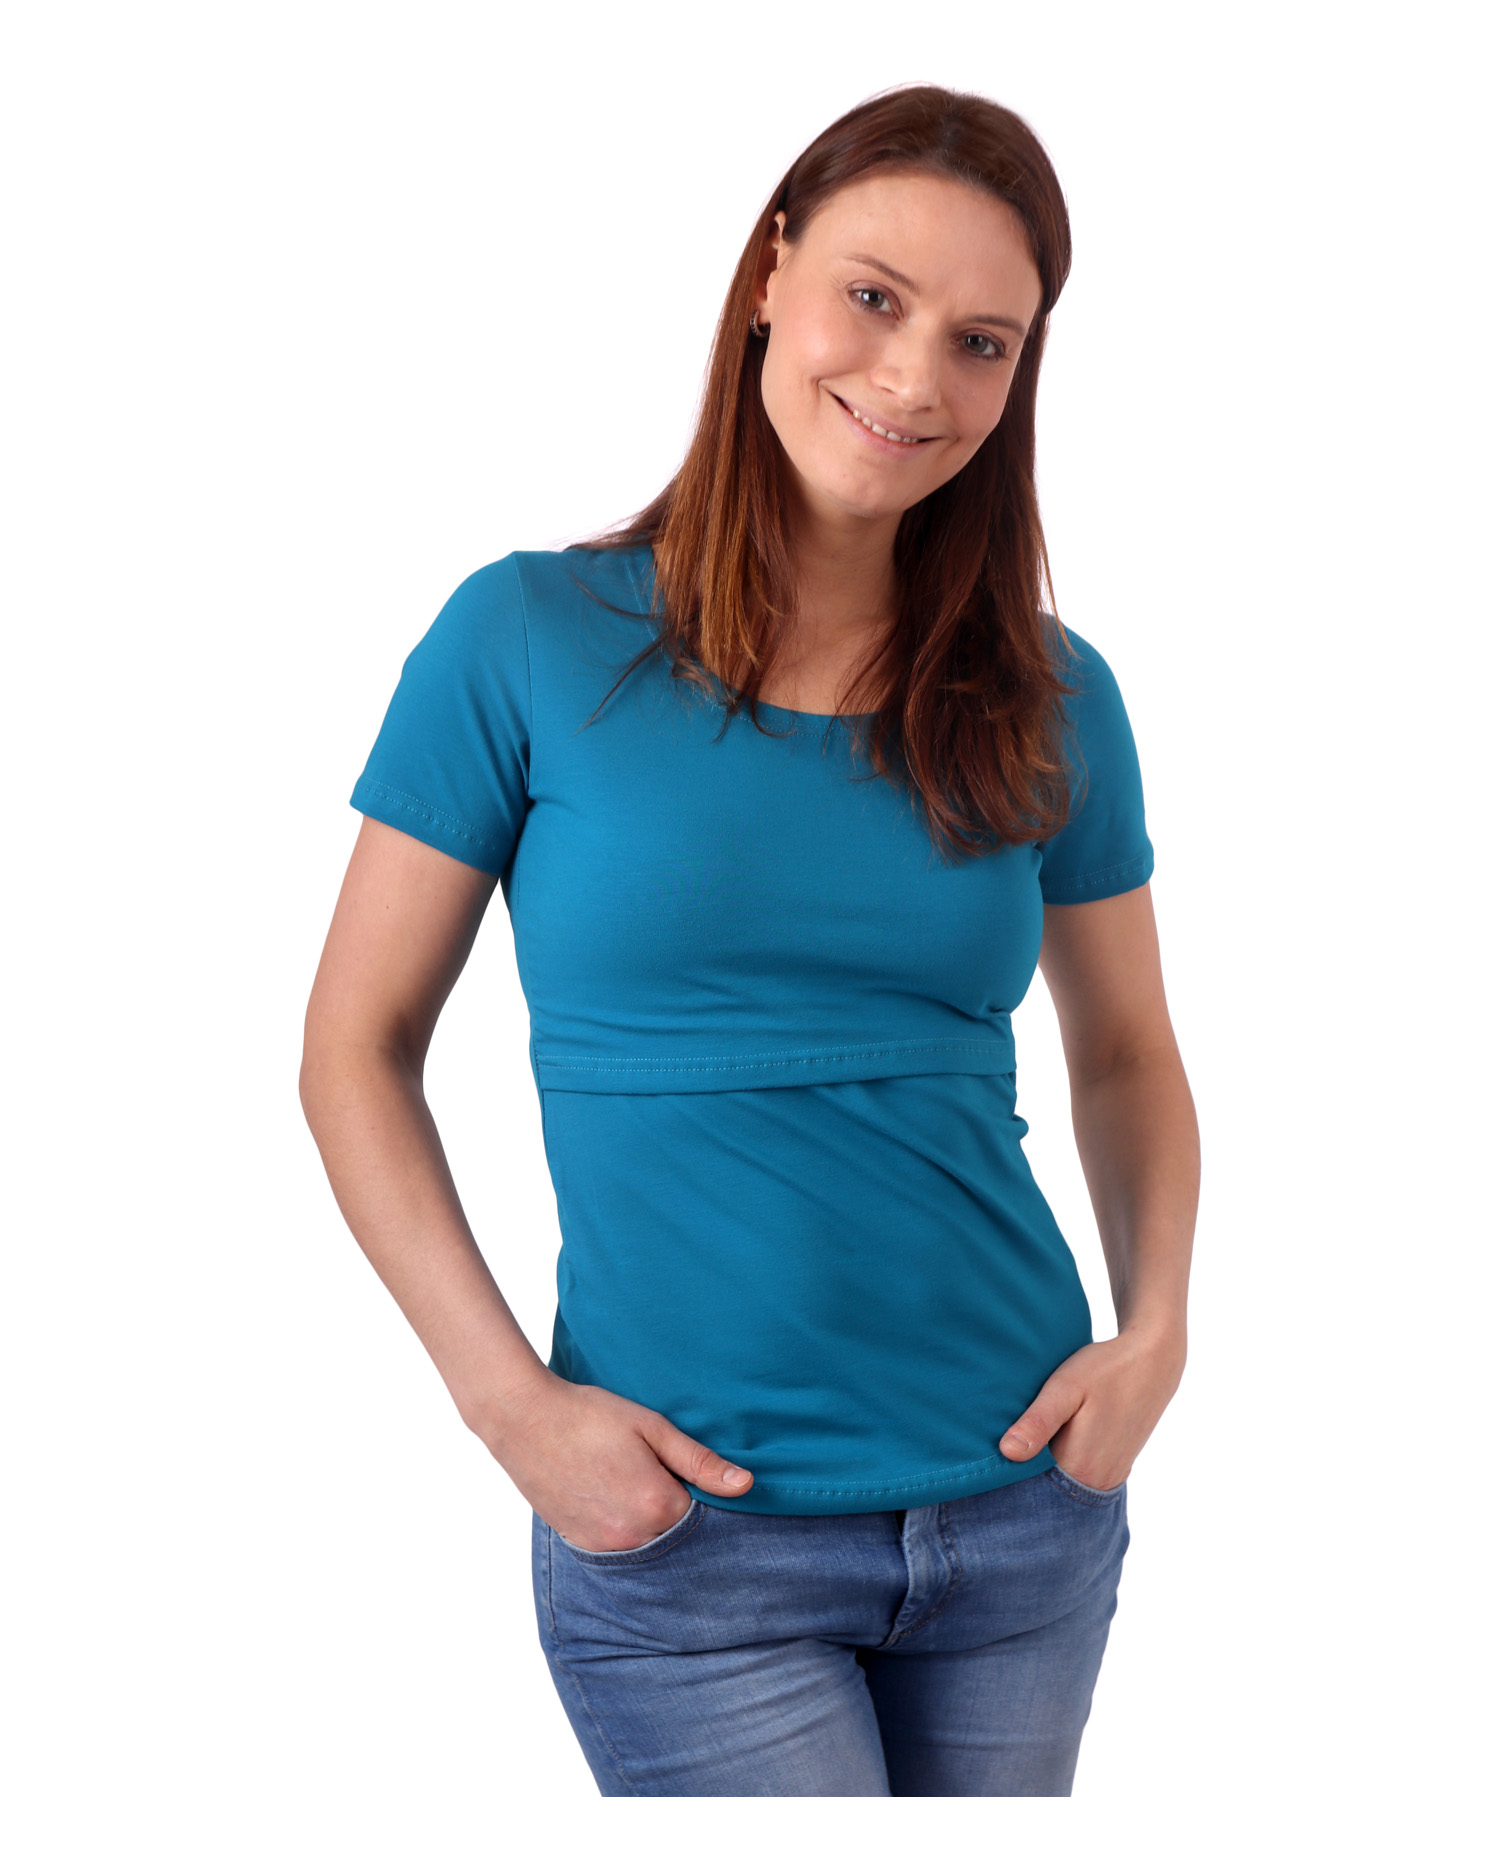 Breast-feeding T-shirt Katerina, short sleeves, dark turquoise S/M